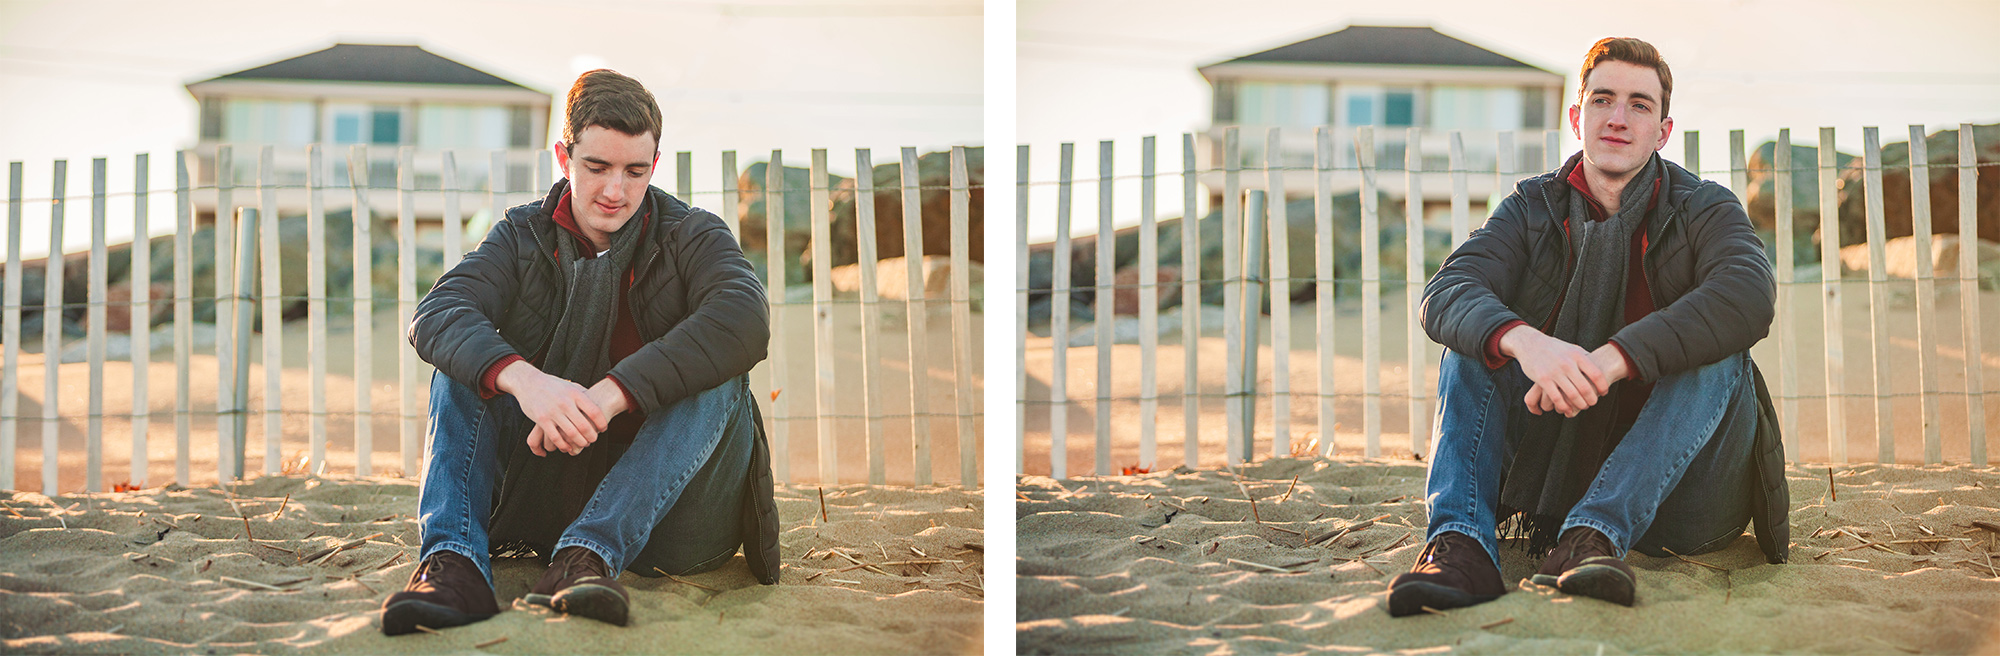 New England Beach Senior Portrait Photographer | Stephen Grant Photography